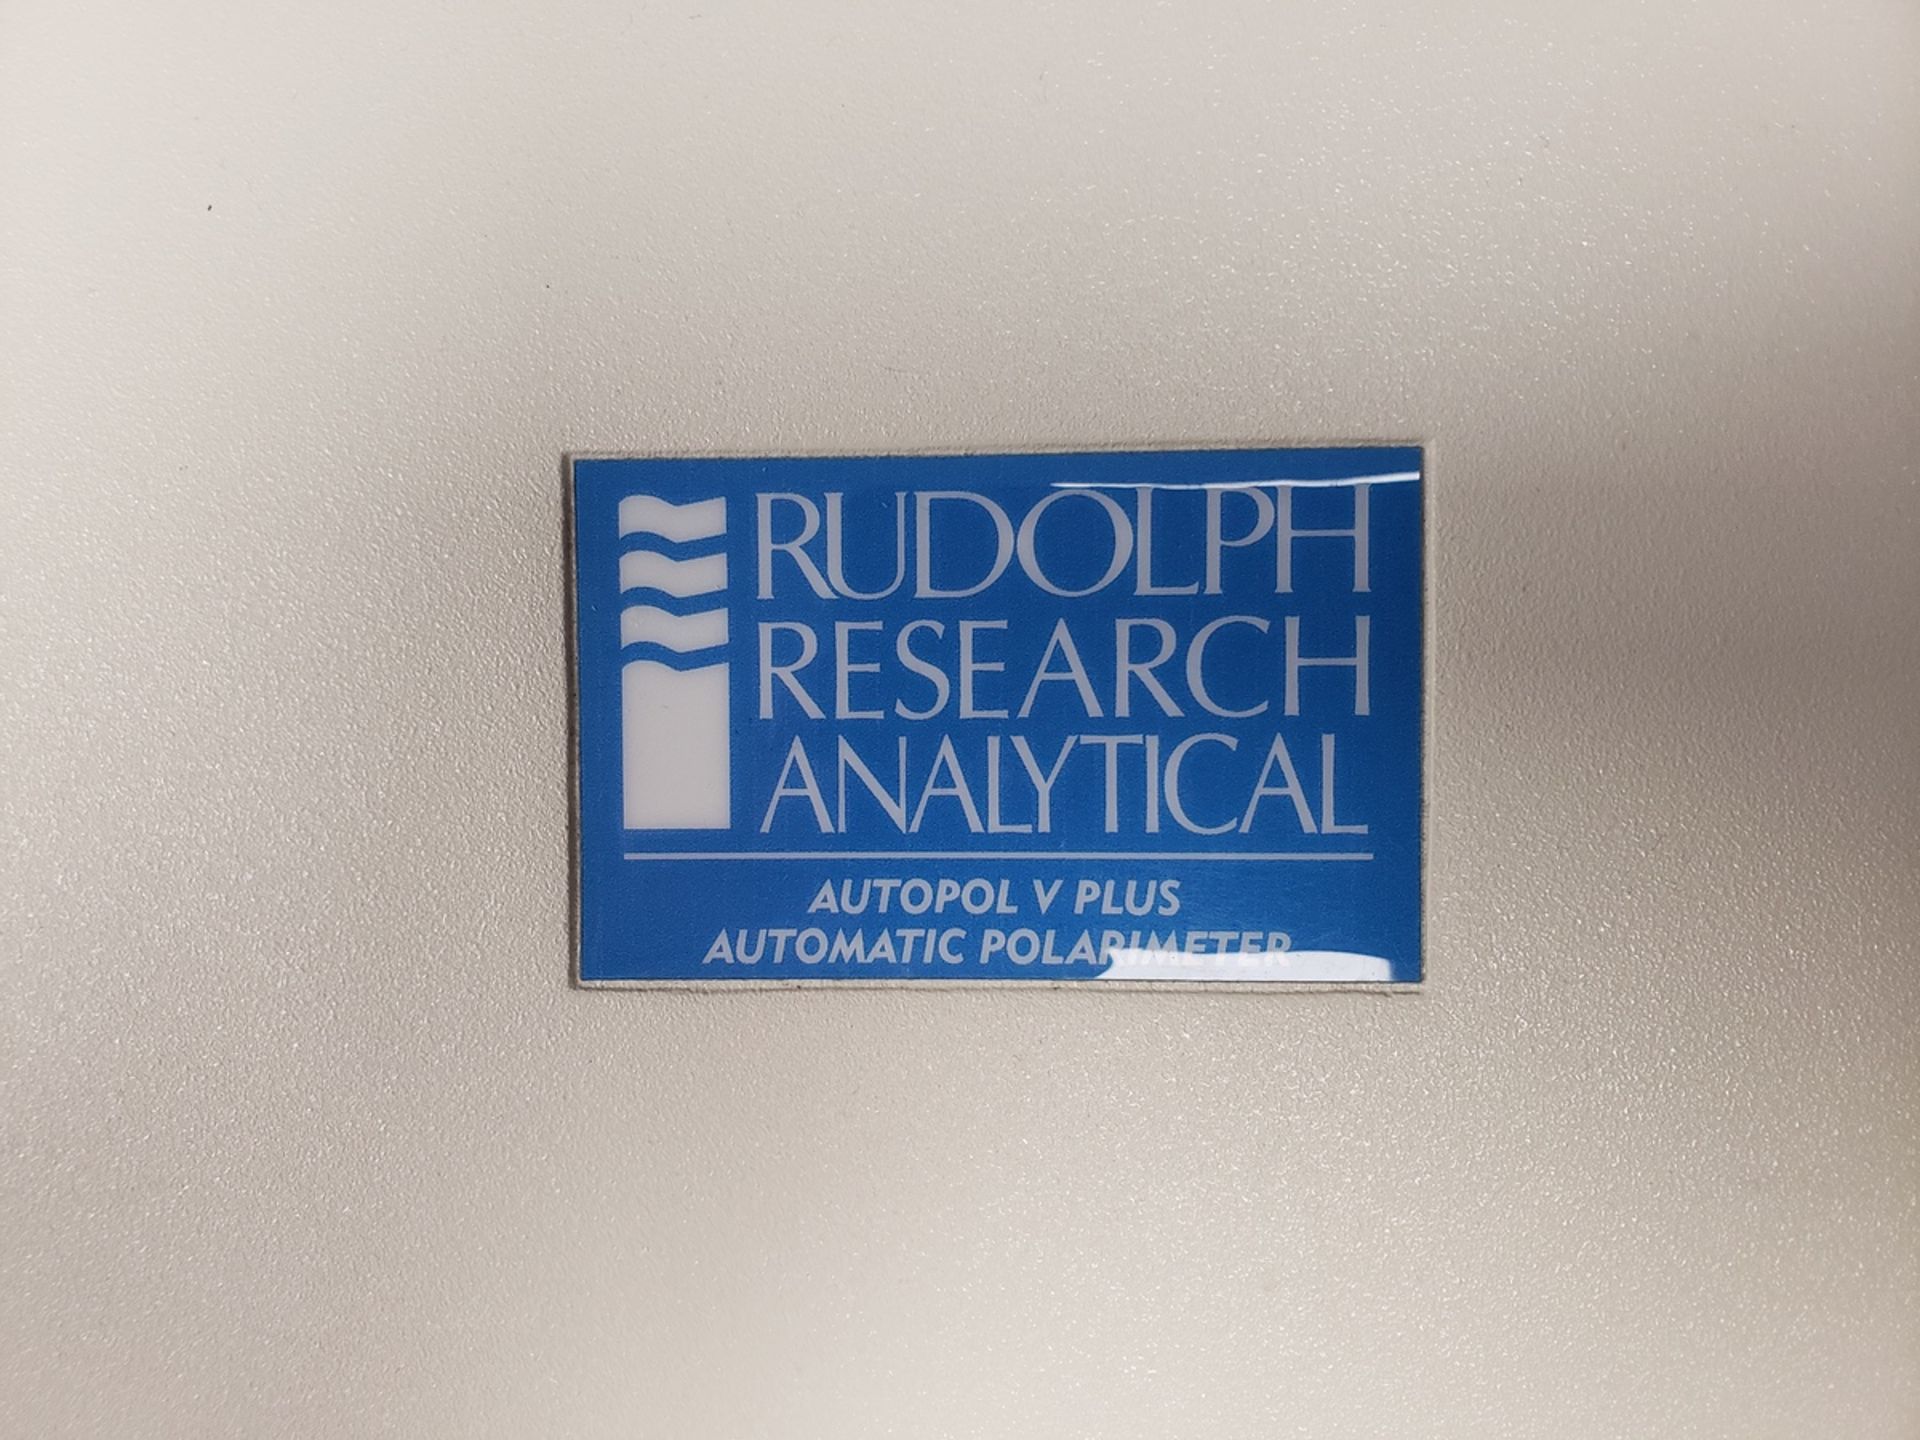 RudolphResearch Analytical Autopol V Plus Automatic Polarimeter, M# APV-PLUS-1W, S/N 86085A - Image 4 of 4